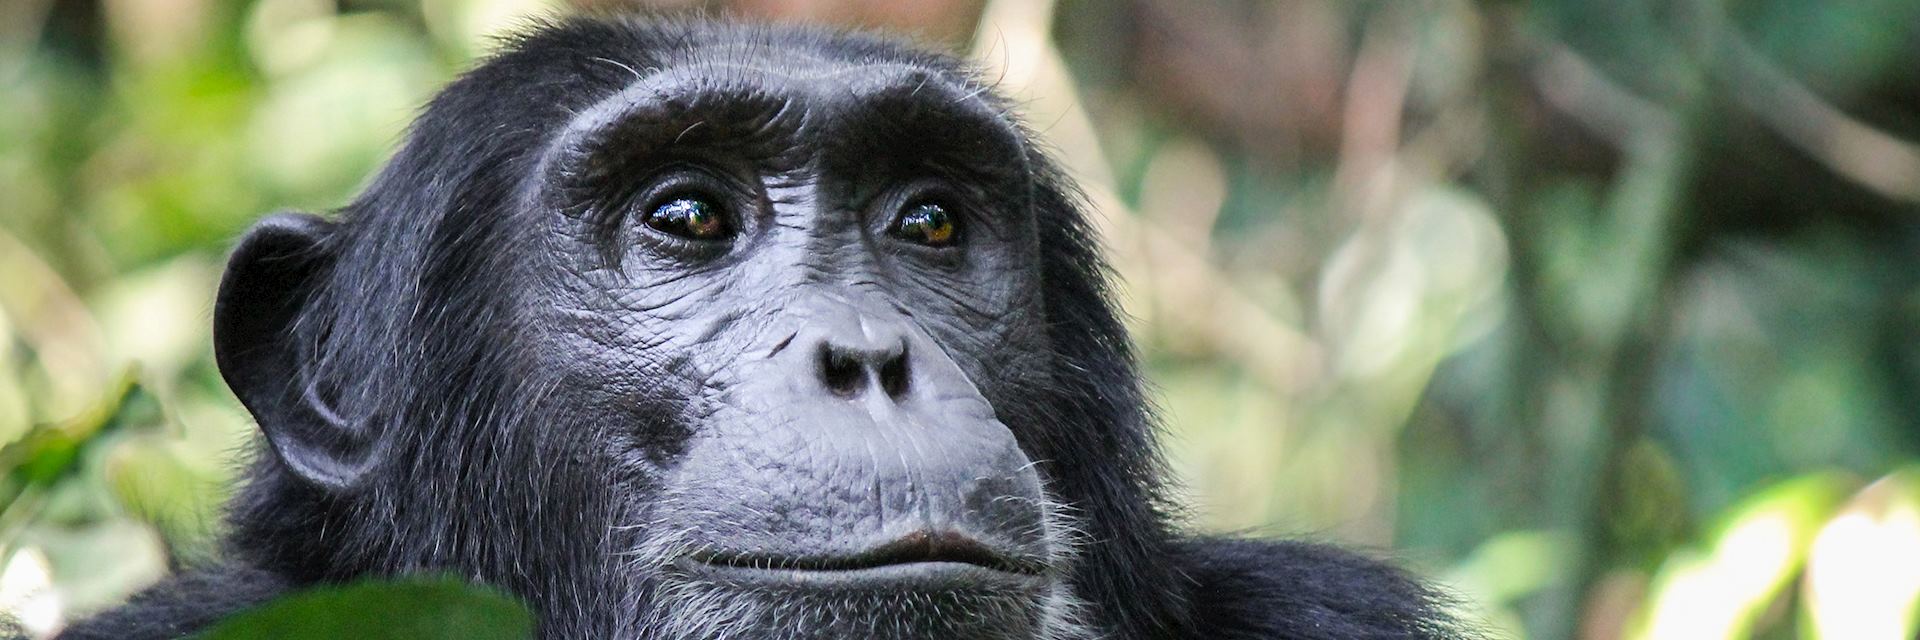 Chimpanzee on Rubondo Island